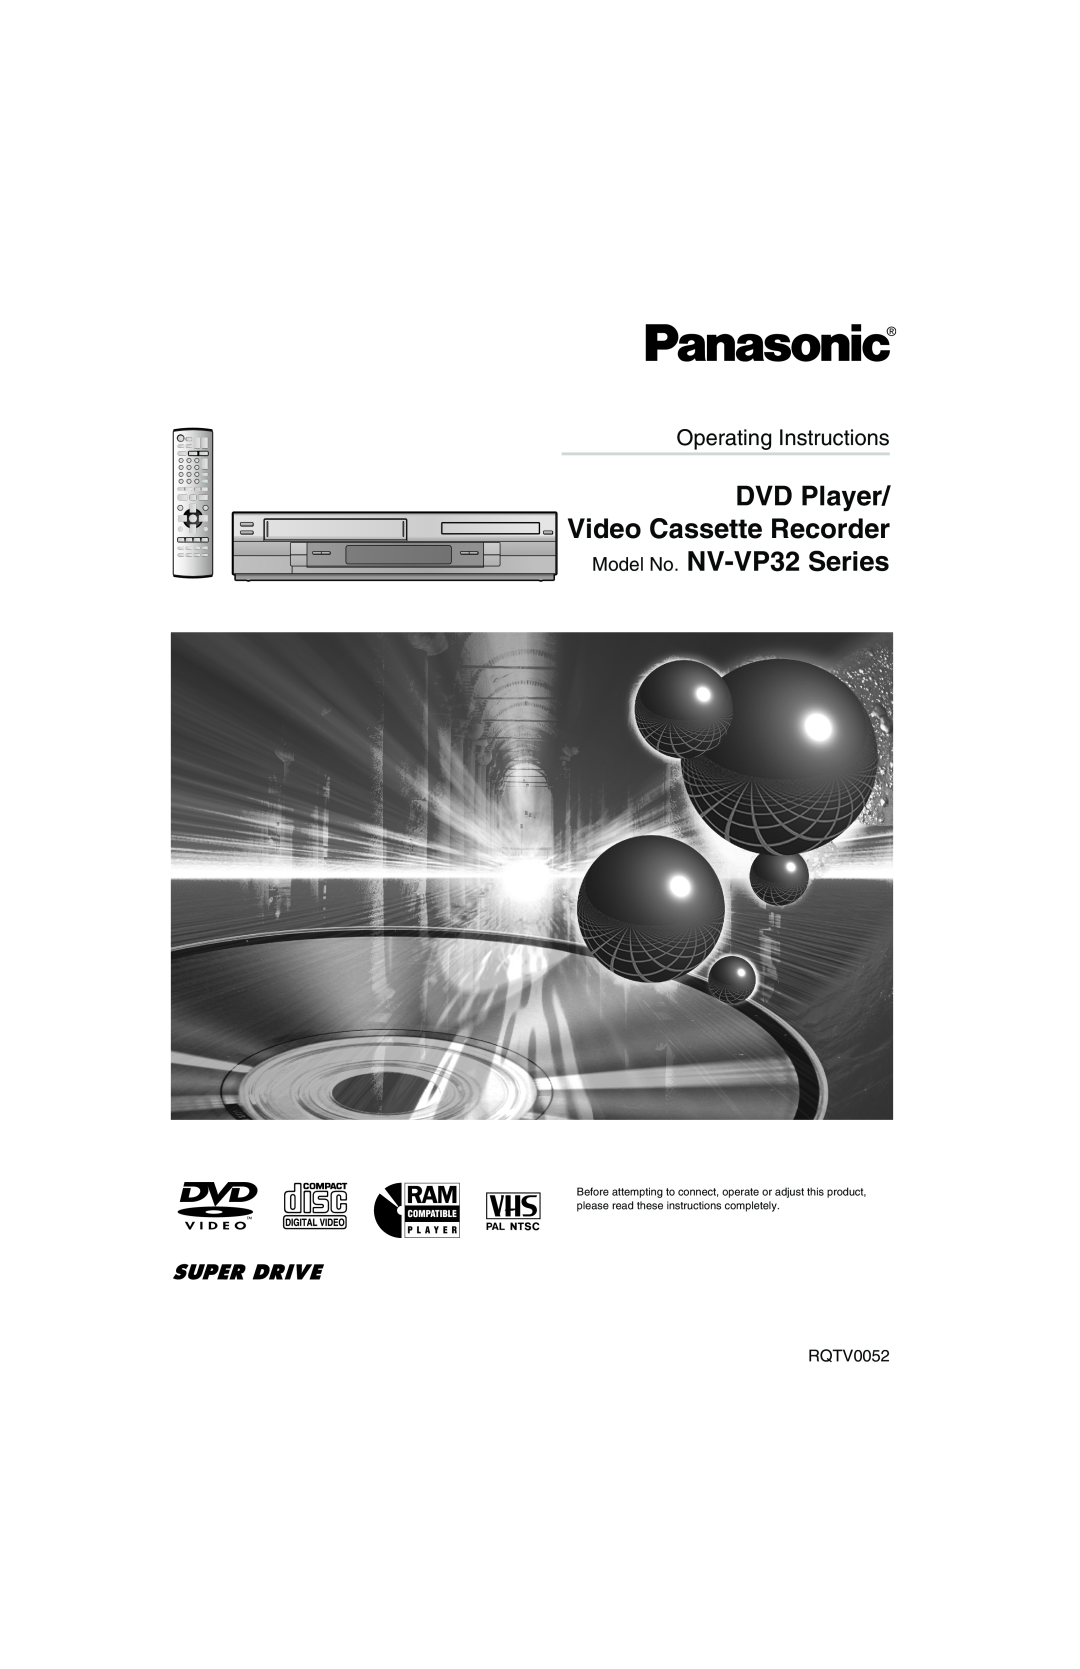 Panasonic manual DVD Player Video Cassette Recorder Model No. NV-VP32 Series, Operating Instructions, RQTV0052 